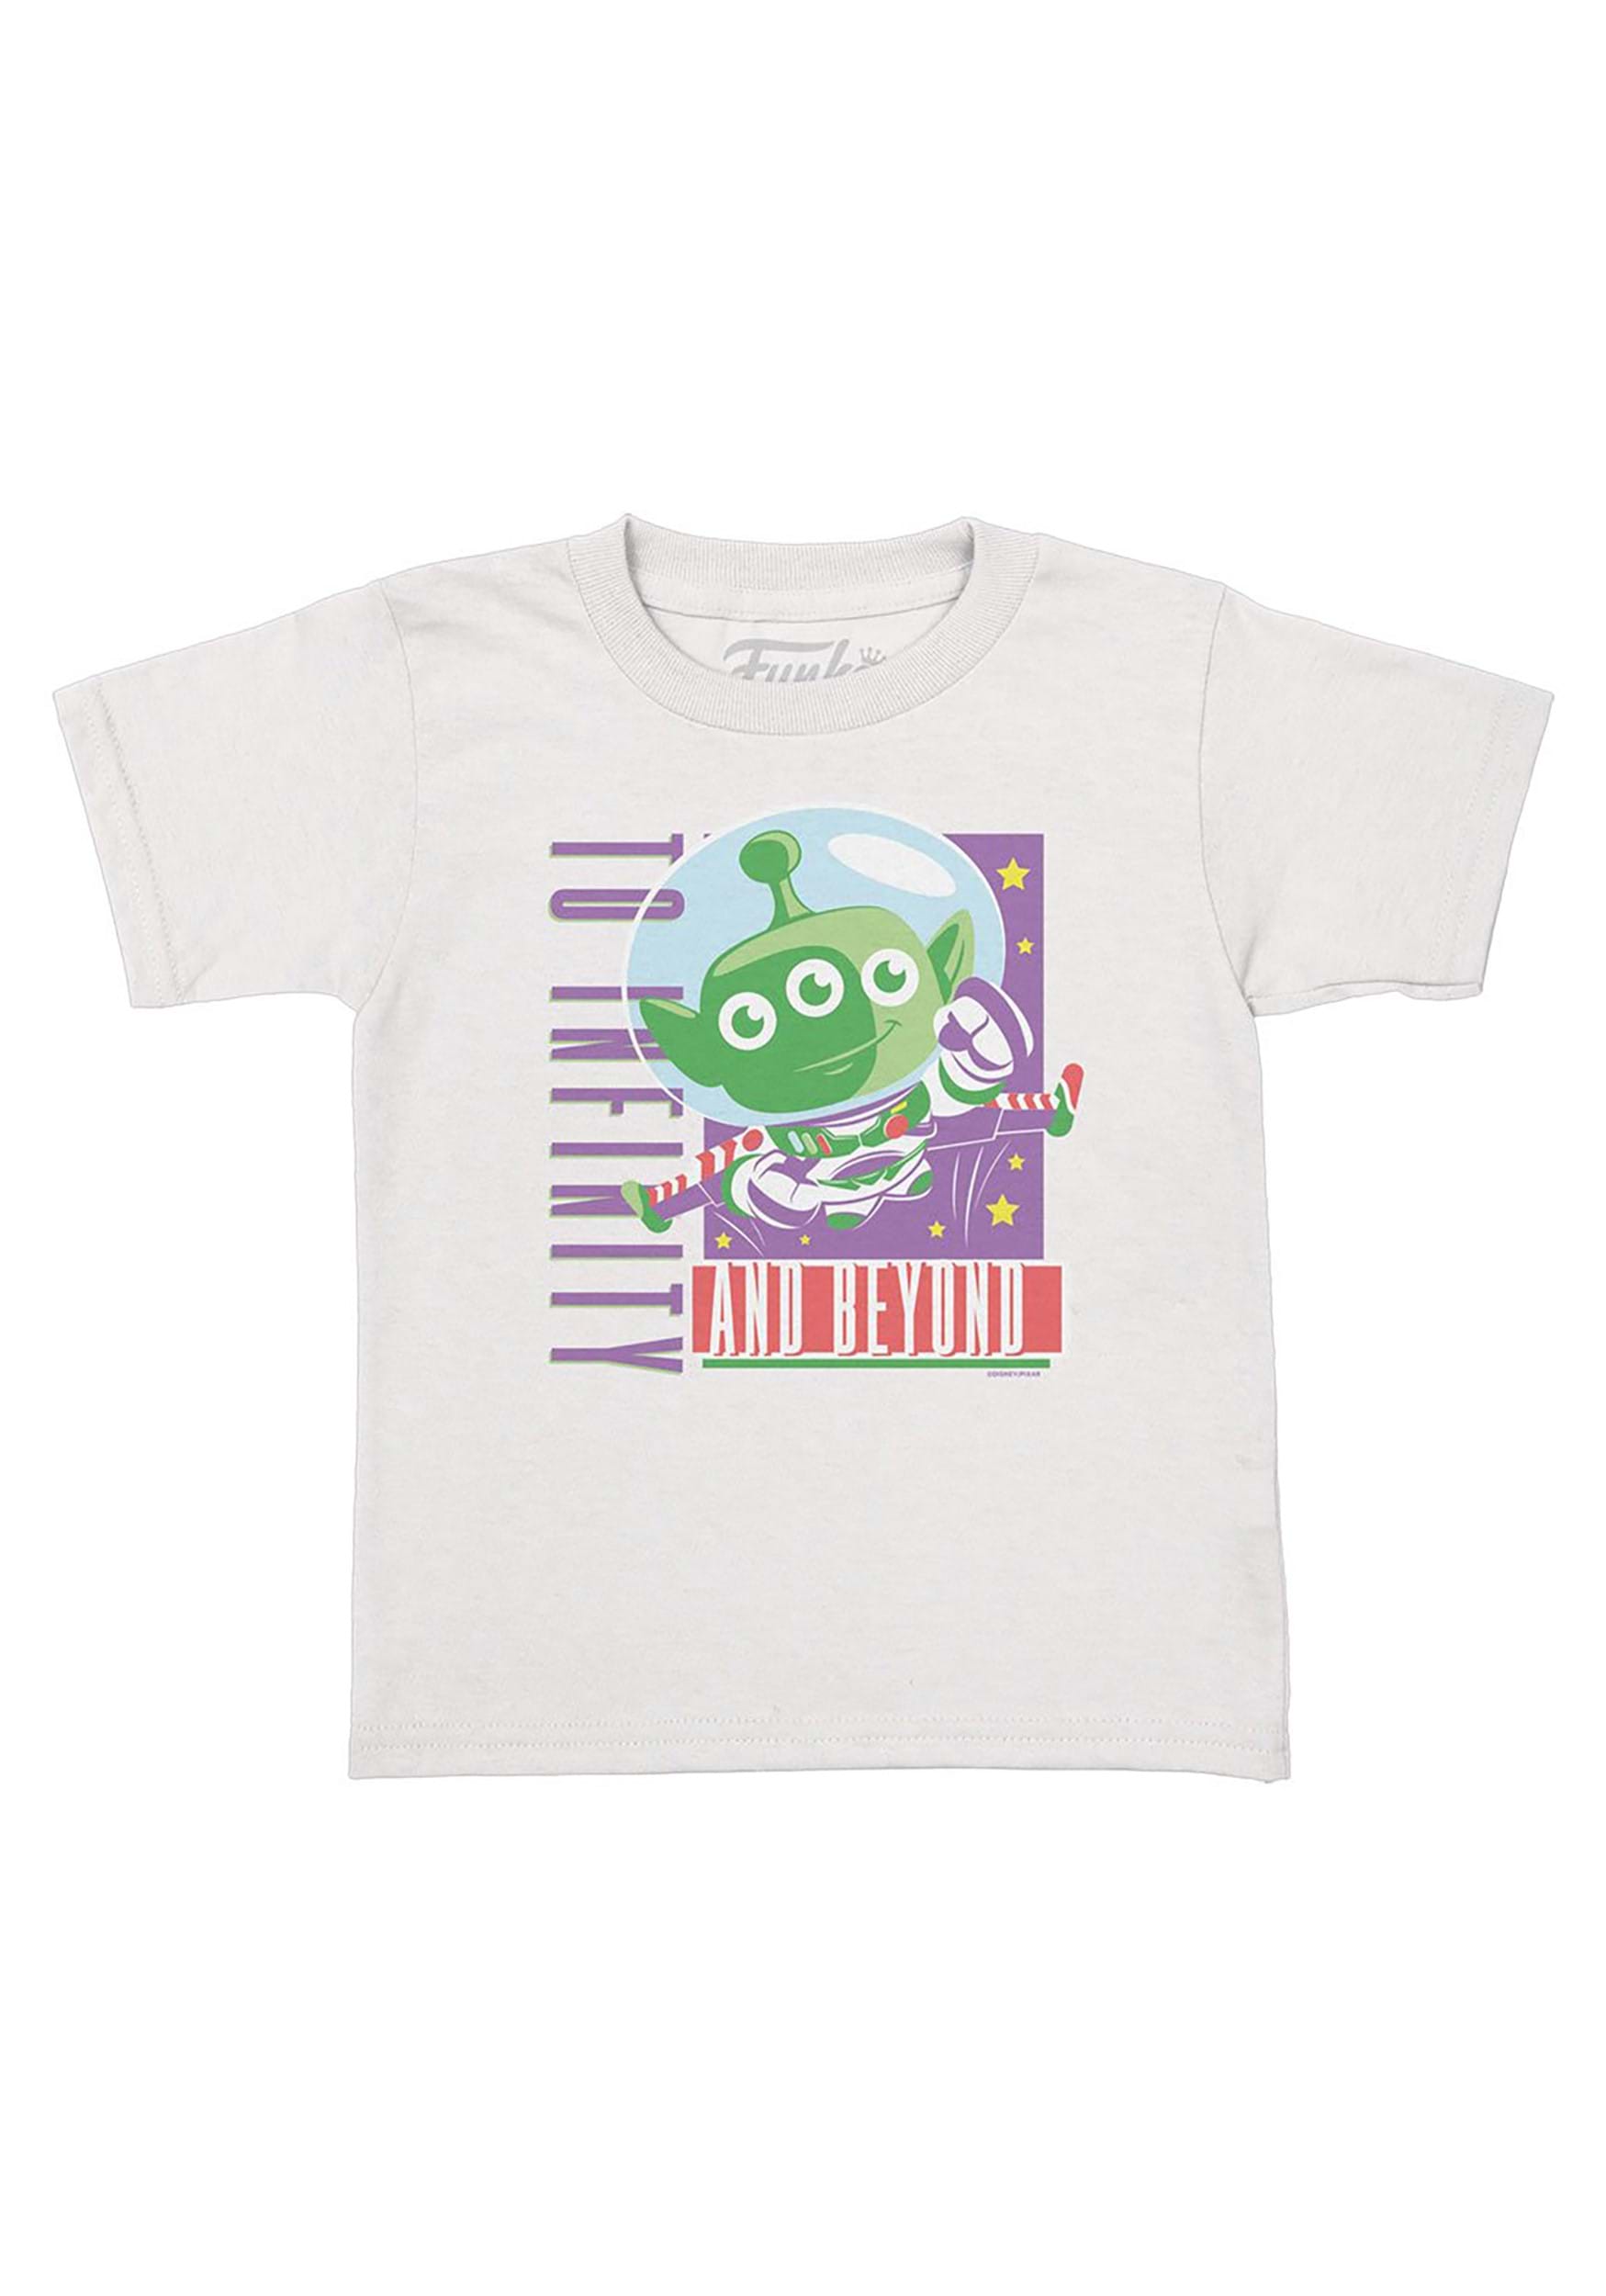 Pocket POP! & Kids Tee: Disney-Alien Buzz T-Shirt & Vinyl Figure